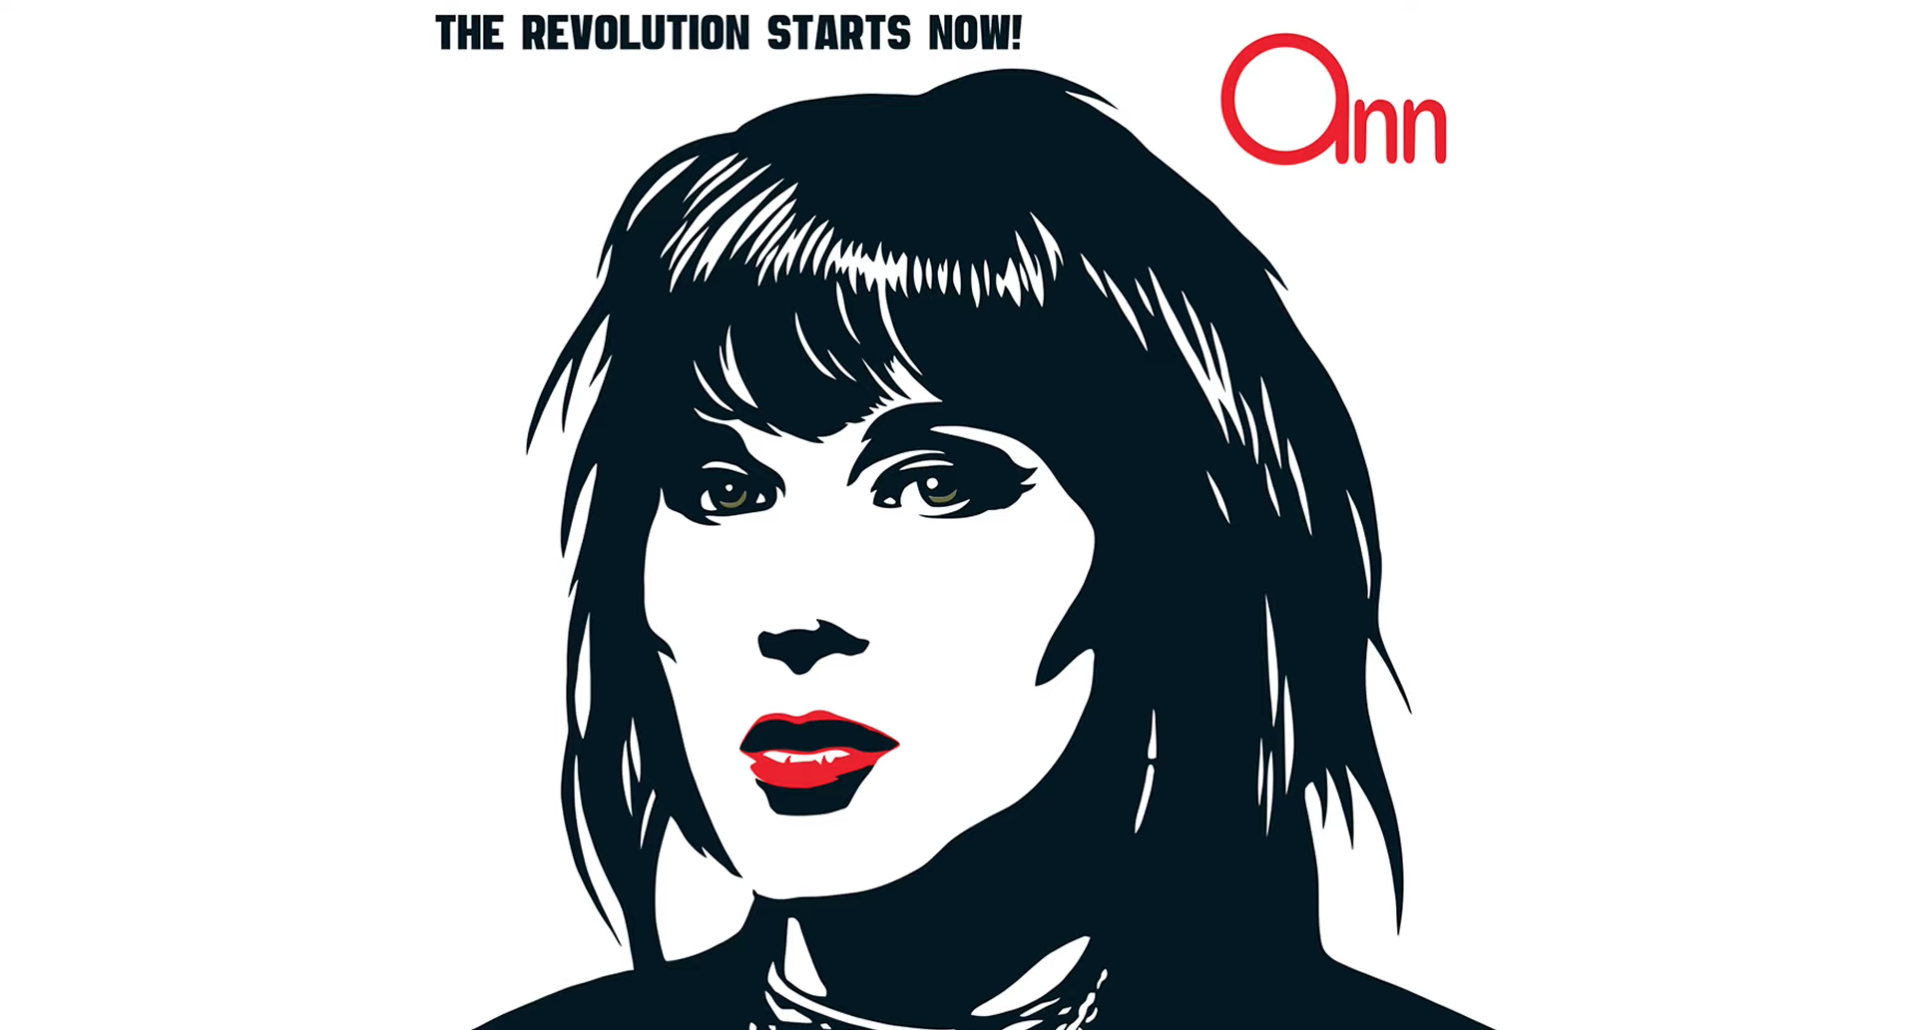 Ann Wilson Shares Cover of Steve Earle’s “The Revolution Starts Now”